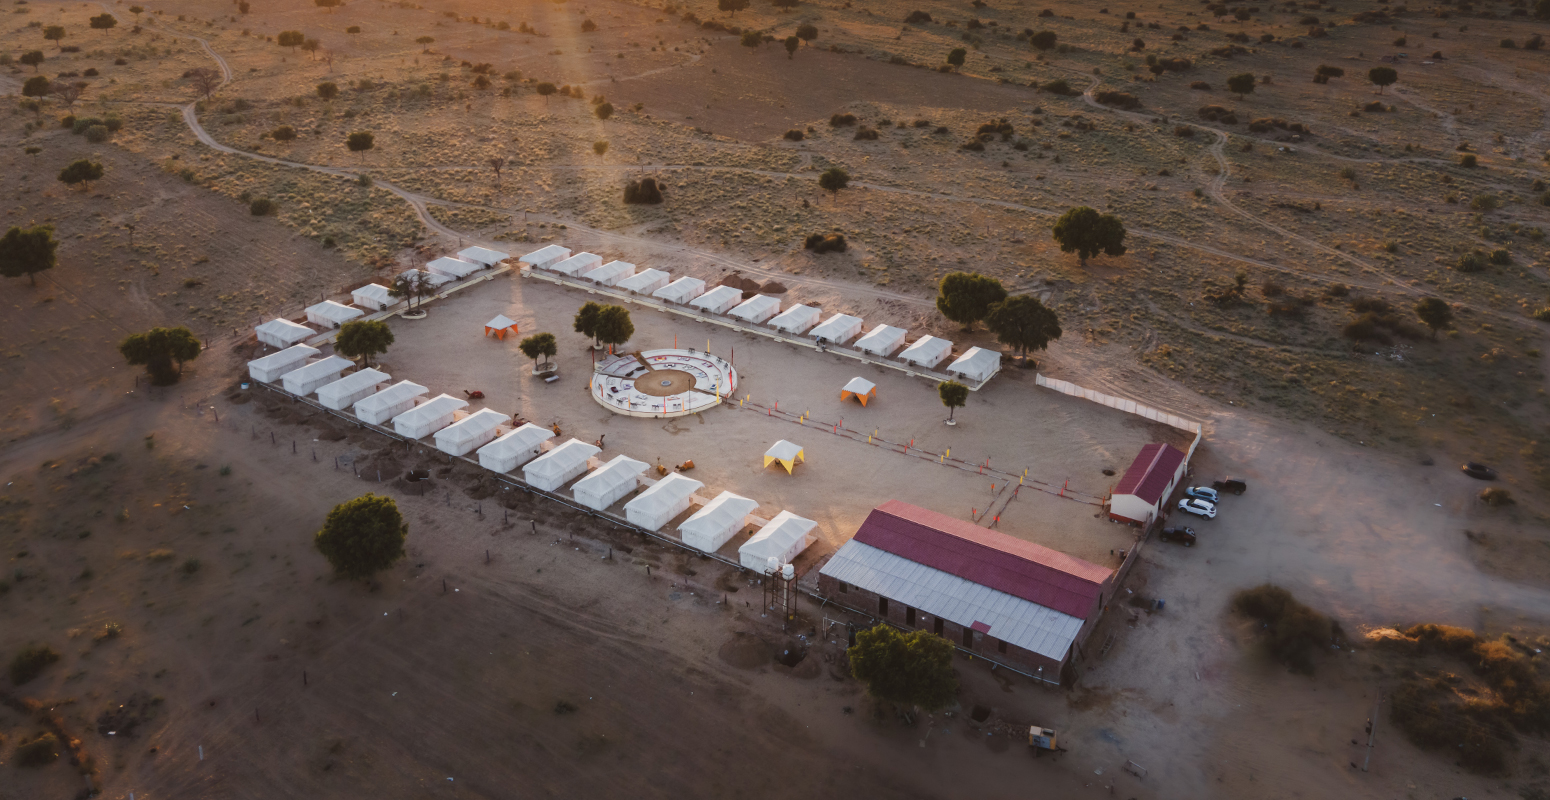 camps in jaisalmer